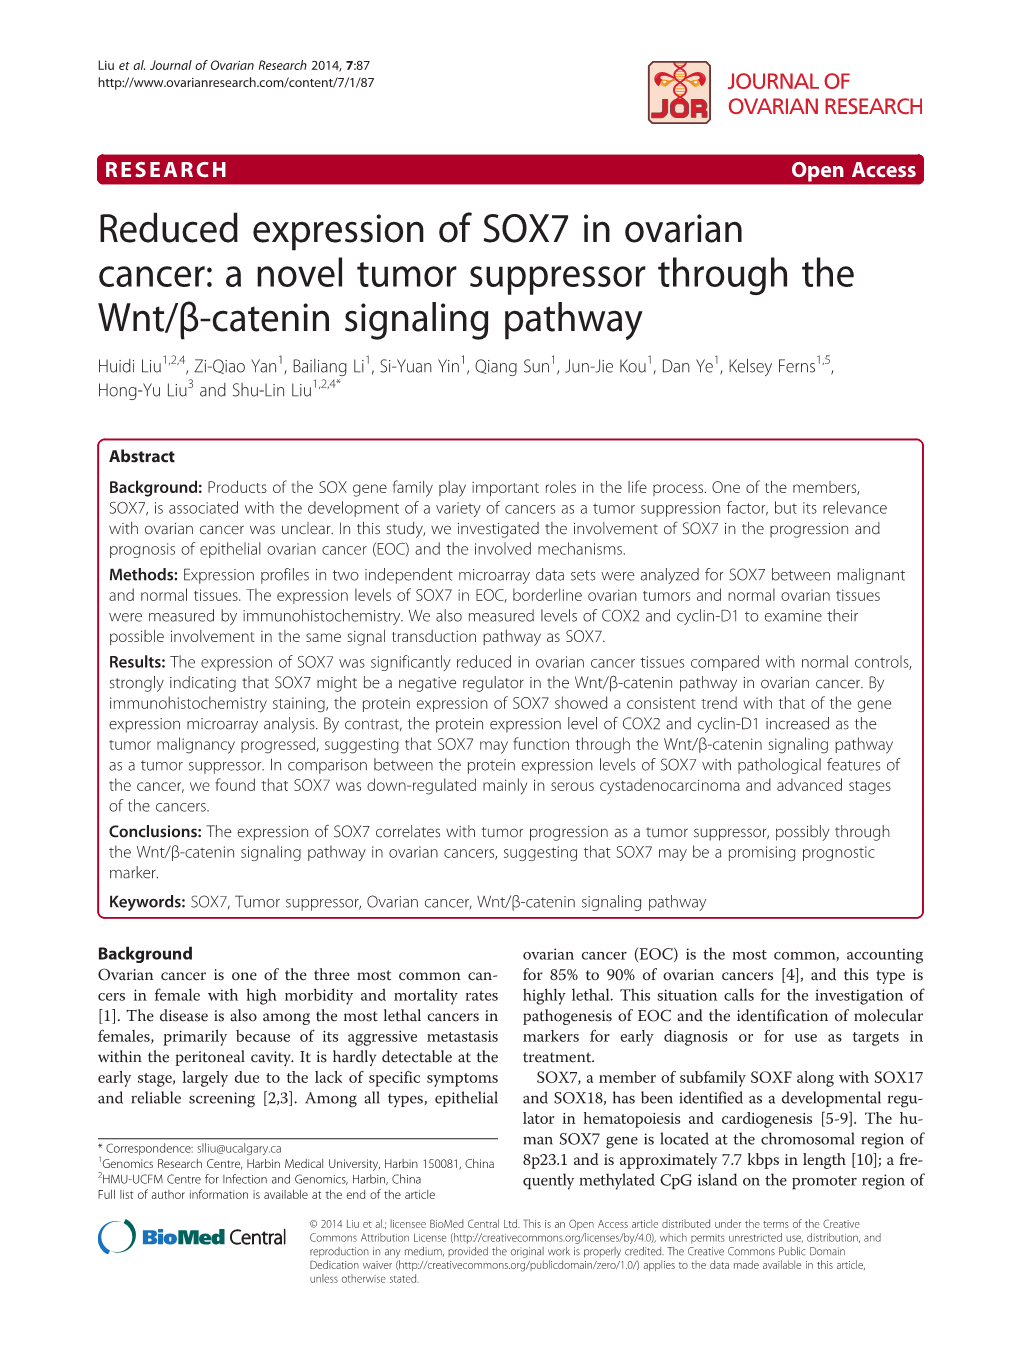 A Novel Tumor Suppressor Through the Wnt/Β-Catenin Signaling Pathway